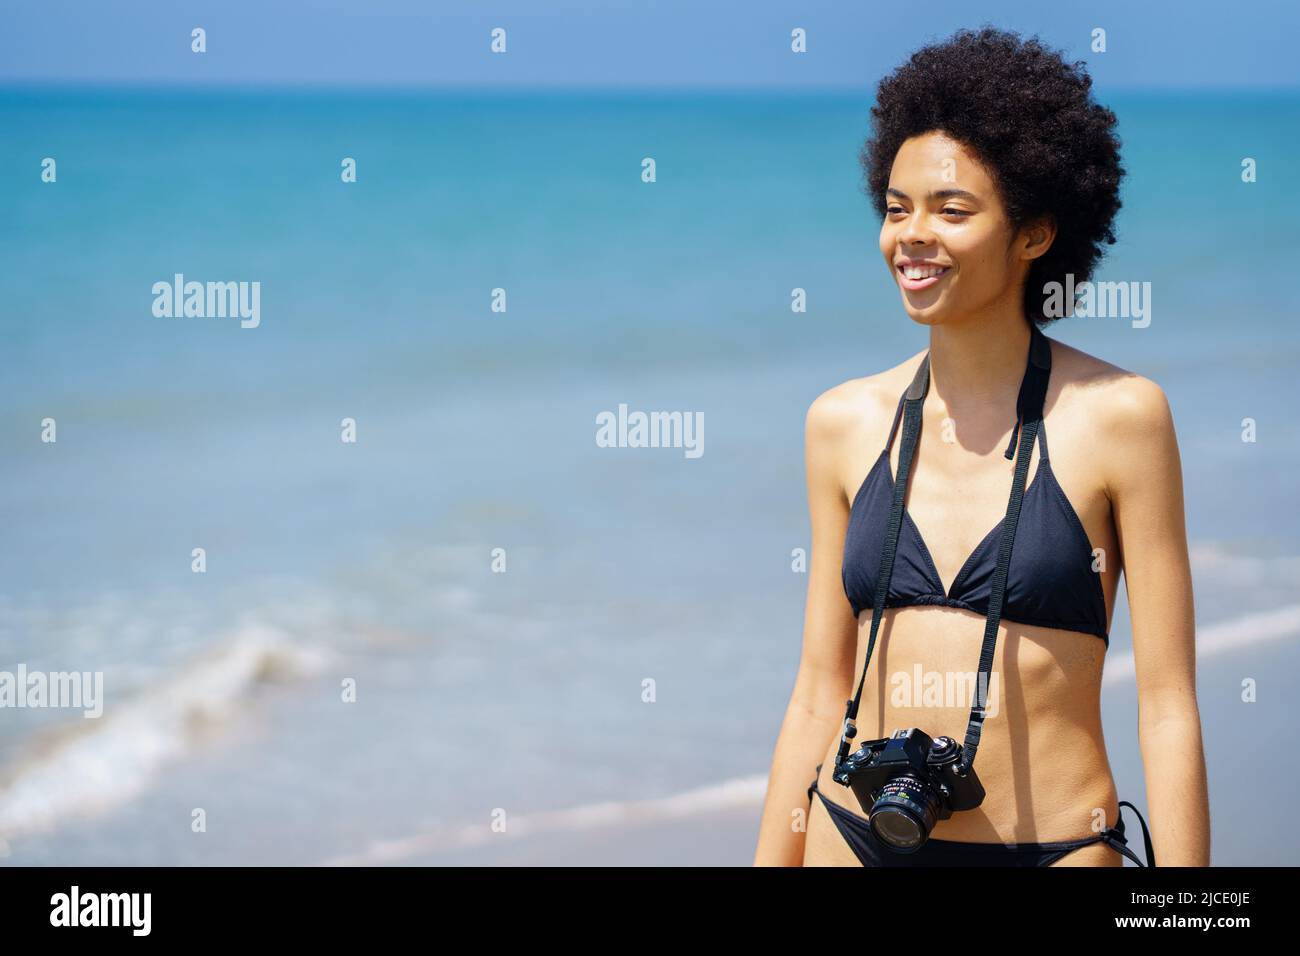 Smiling black woman with photo camera near sea Stock Photo